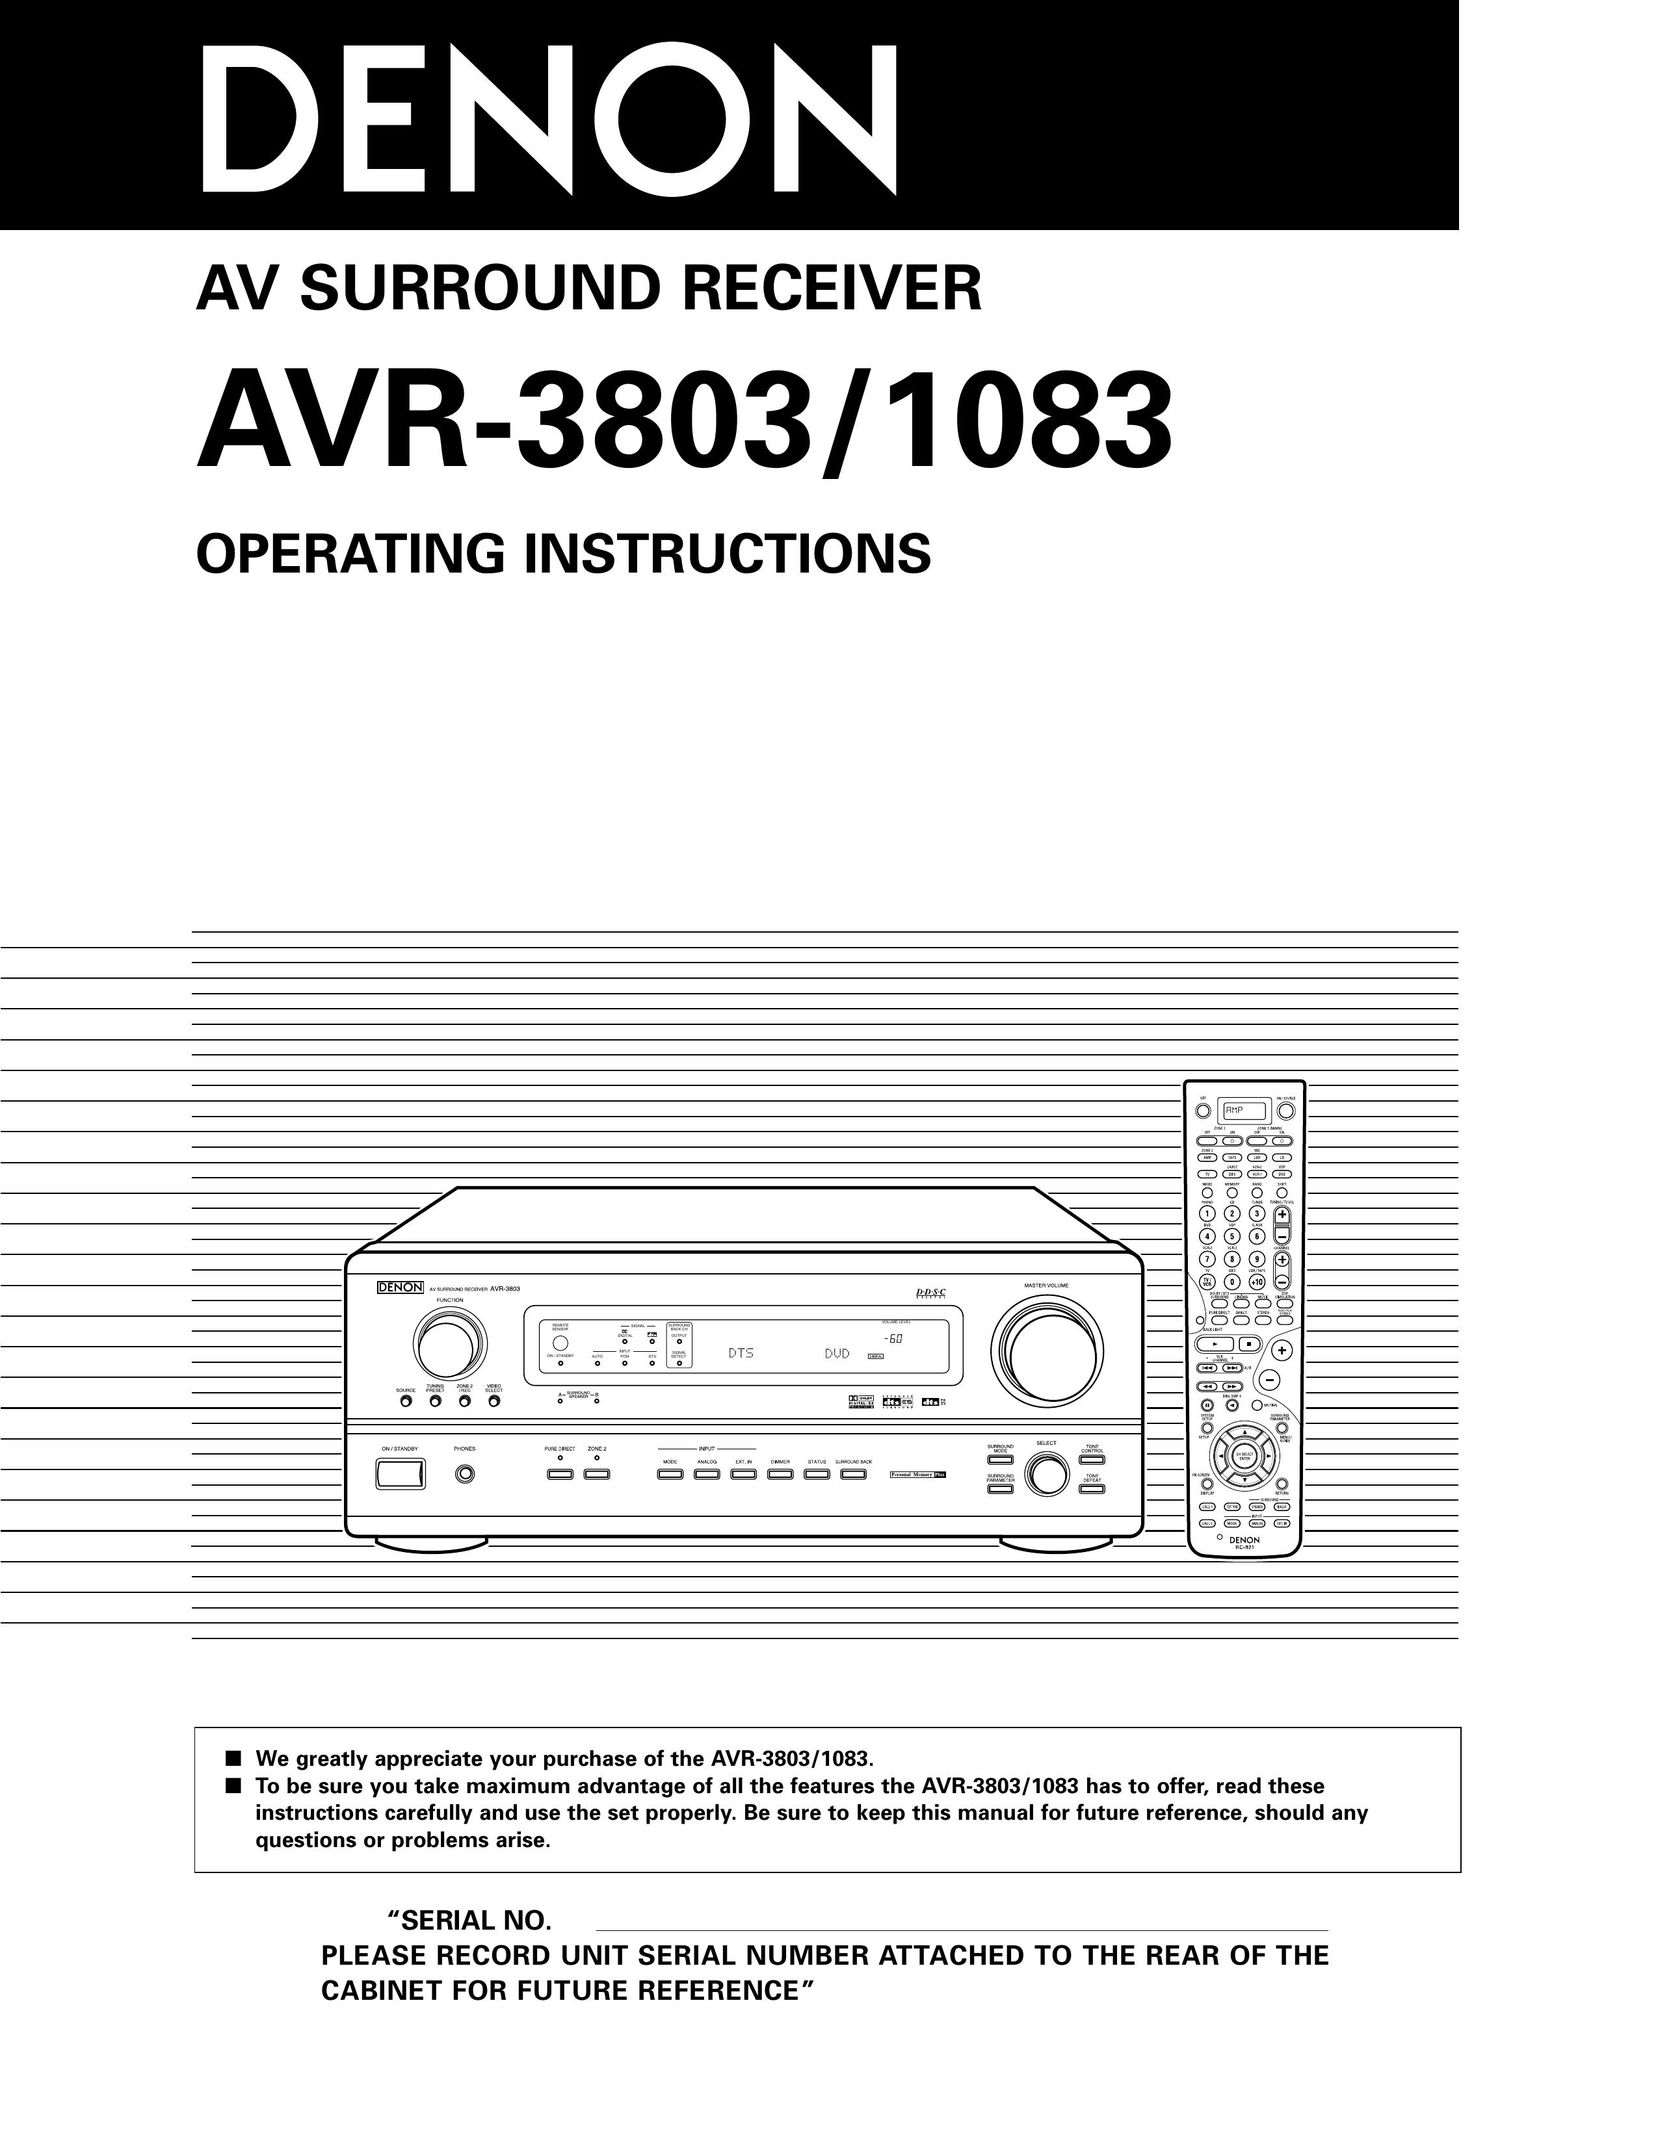 Denon AVR-1083 Stereo Receiver User Manual